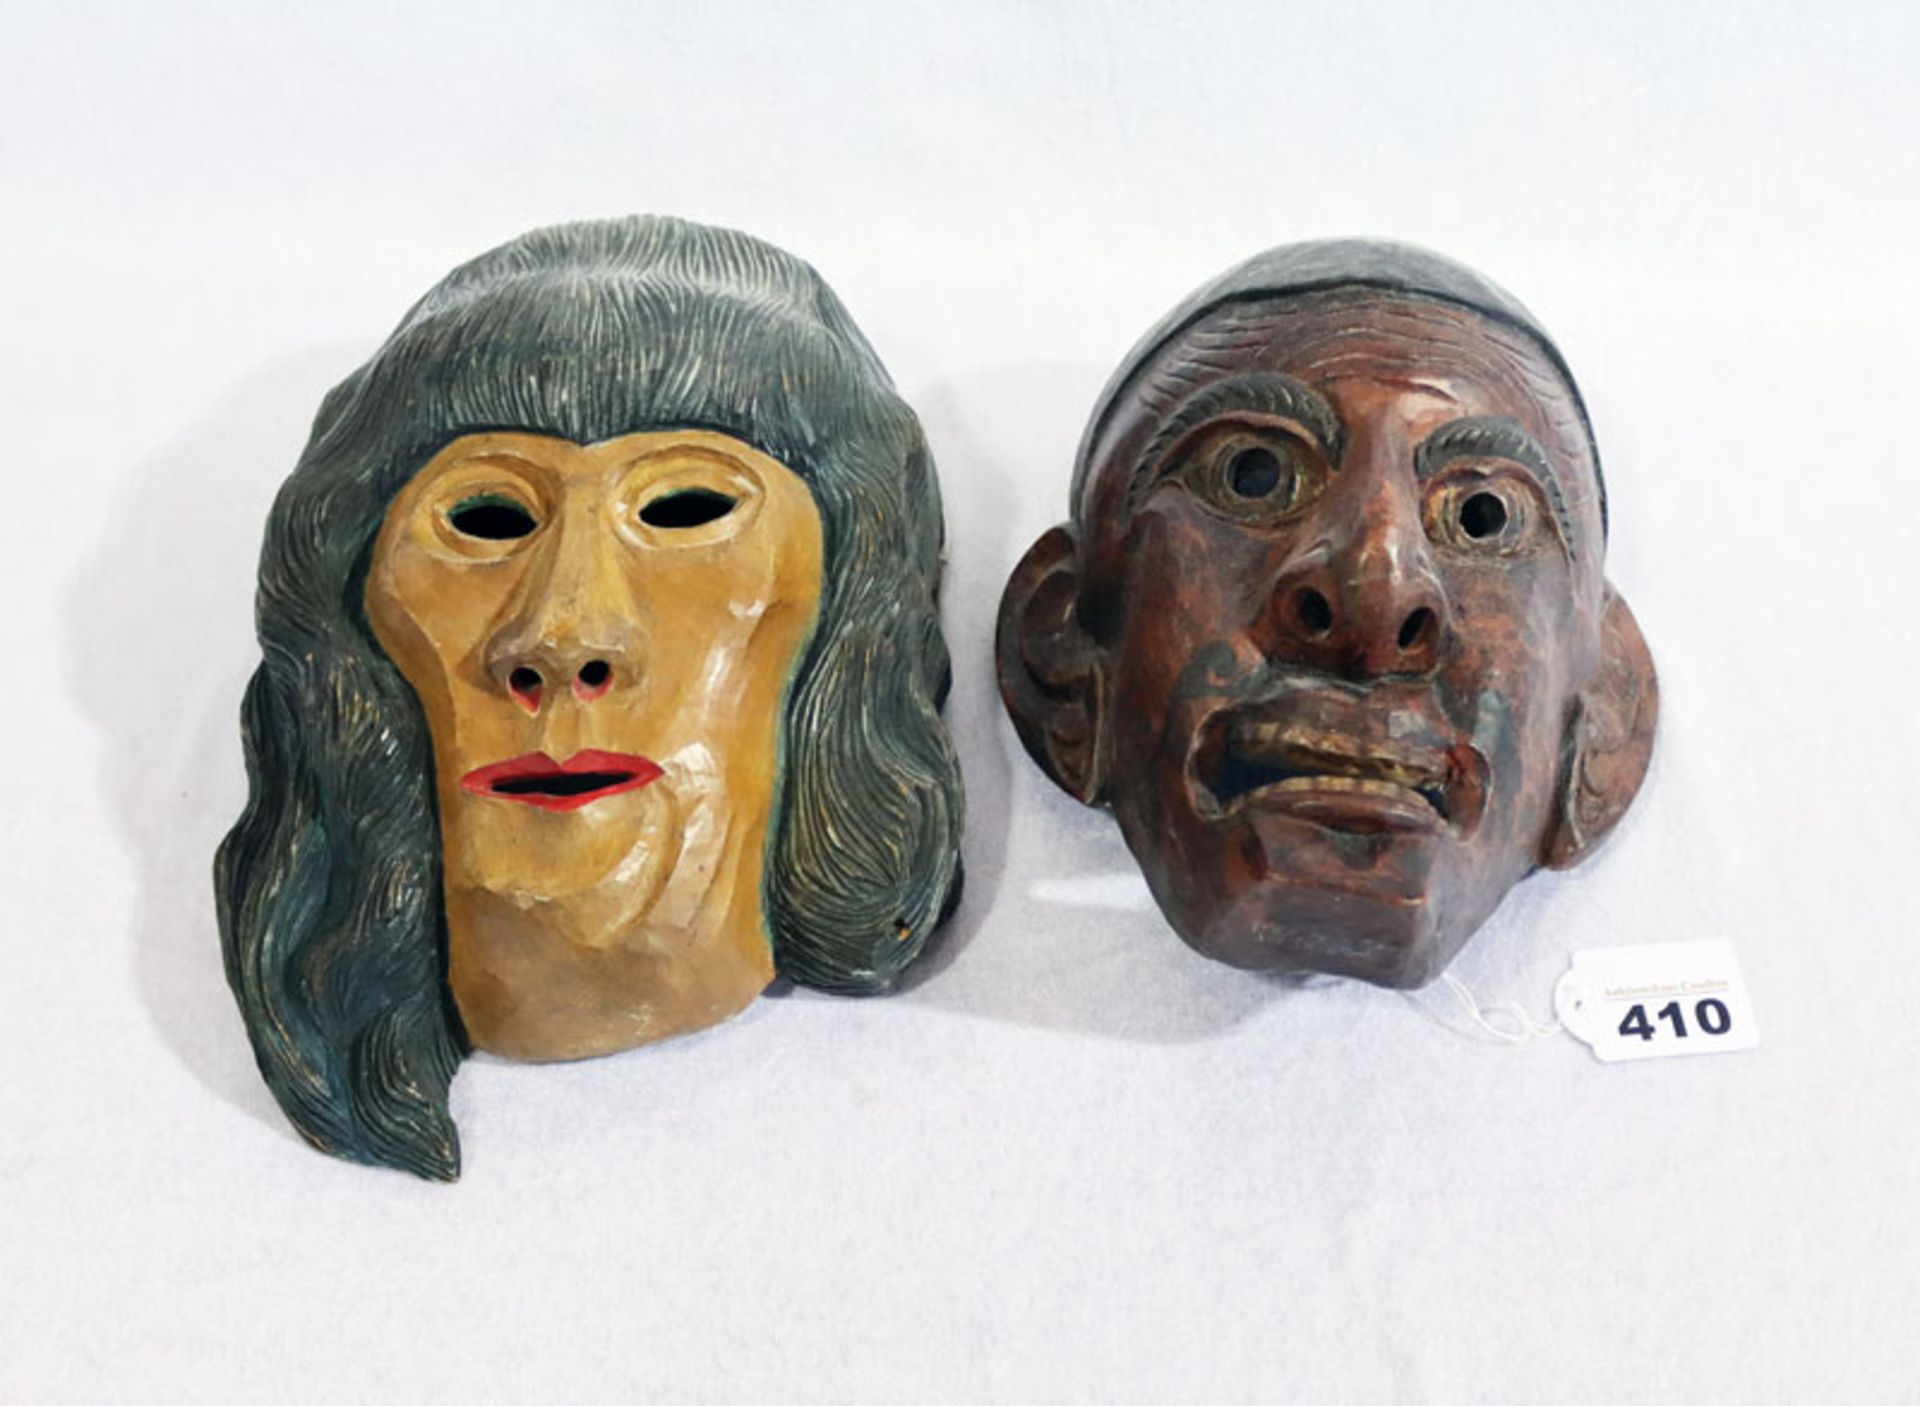 2 Holzmasken, 'Frau', farbig gefaßt, H 23 cm, B 15 cm, und 'Mann', dunkel gefaßt, H 21 cm, B 12